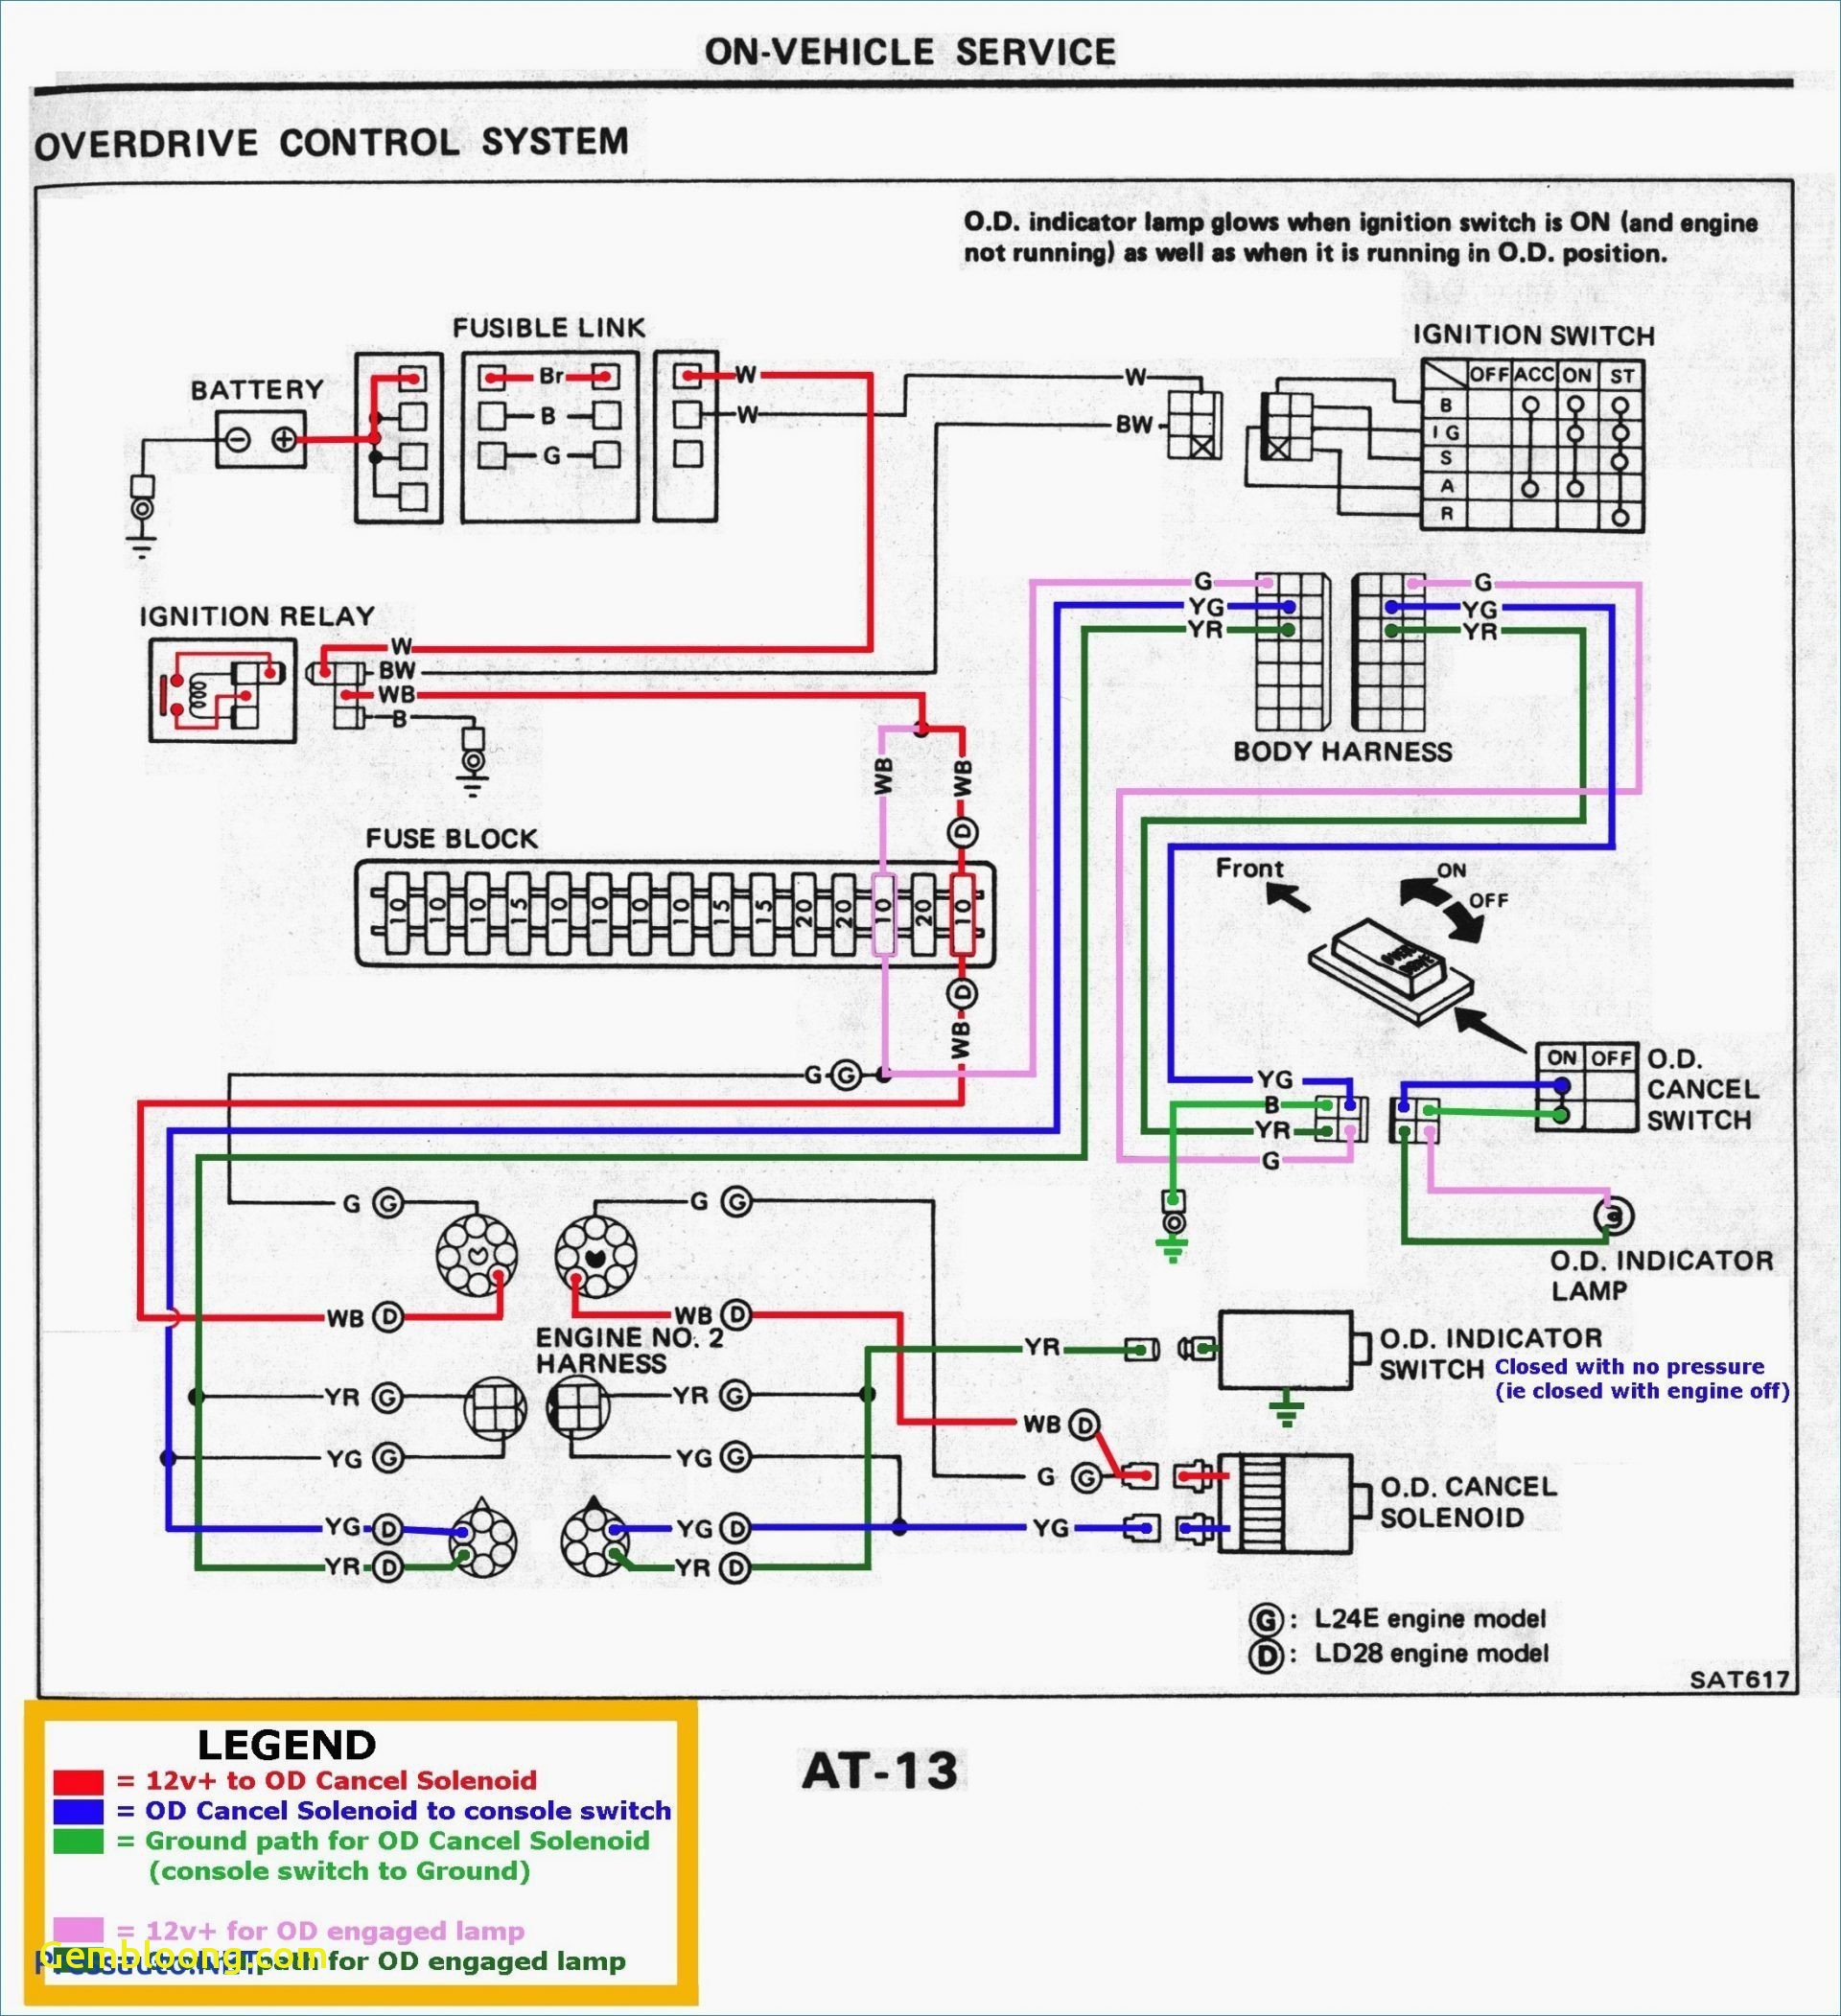 Car Battery Diagram Md Bmw E53 Amp Wiring Diagram Wiring Diagram Go Of Car Battery Diagram